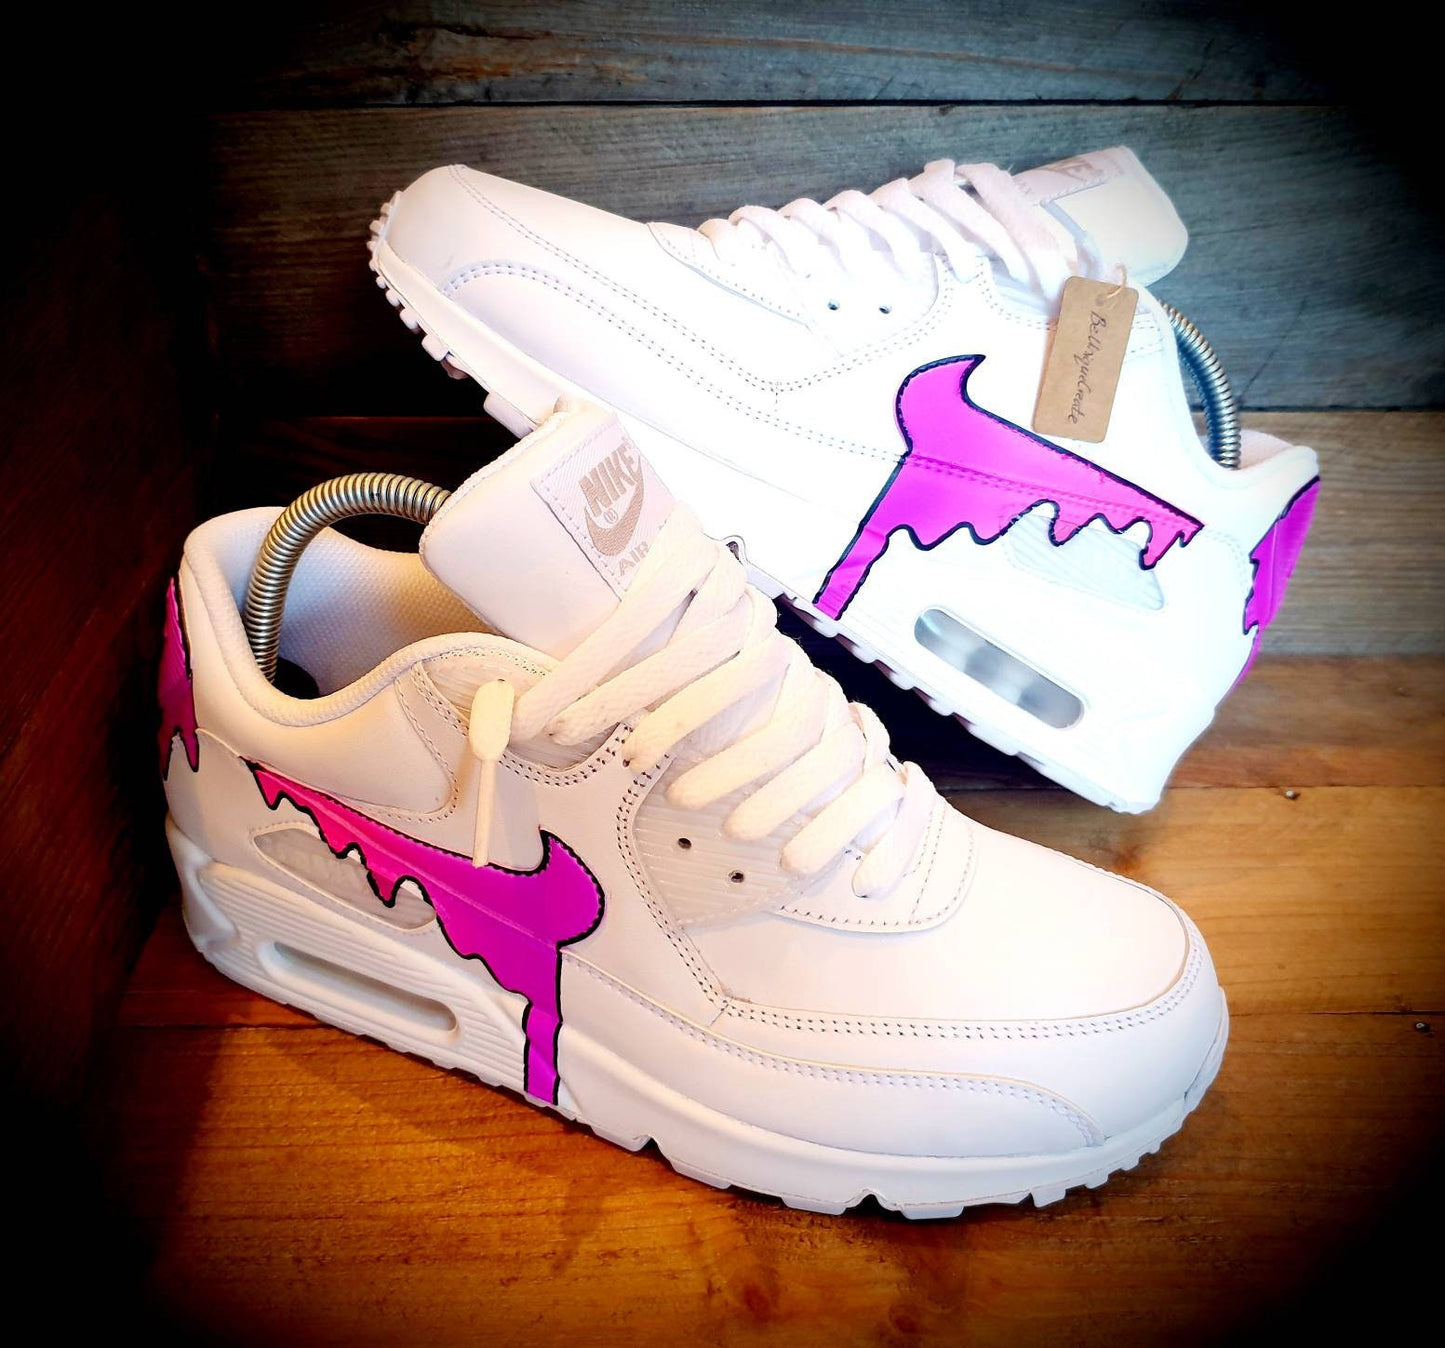 Custom Painted Air Max 90/Sneakers/Shoes/Kicks/Premium/Personalised/Neon Purple Drip